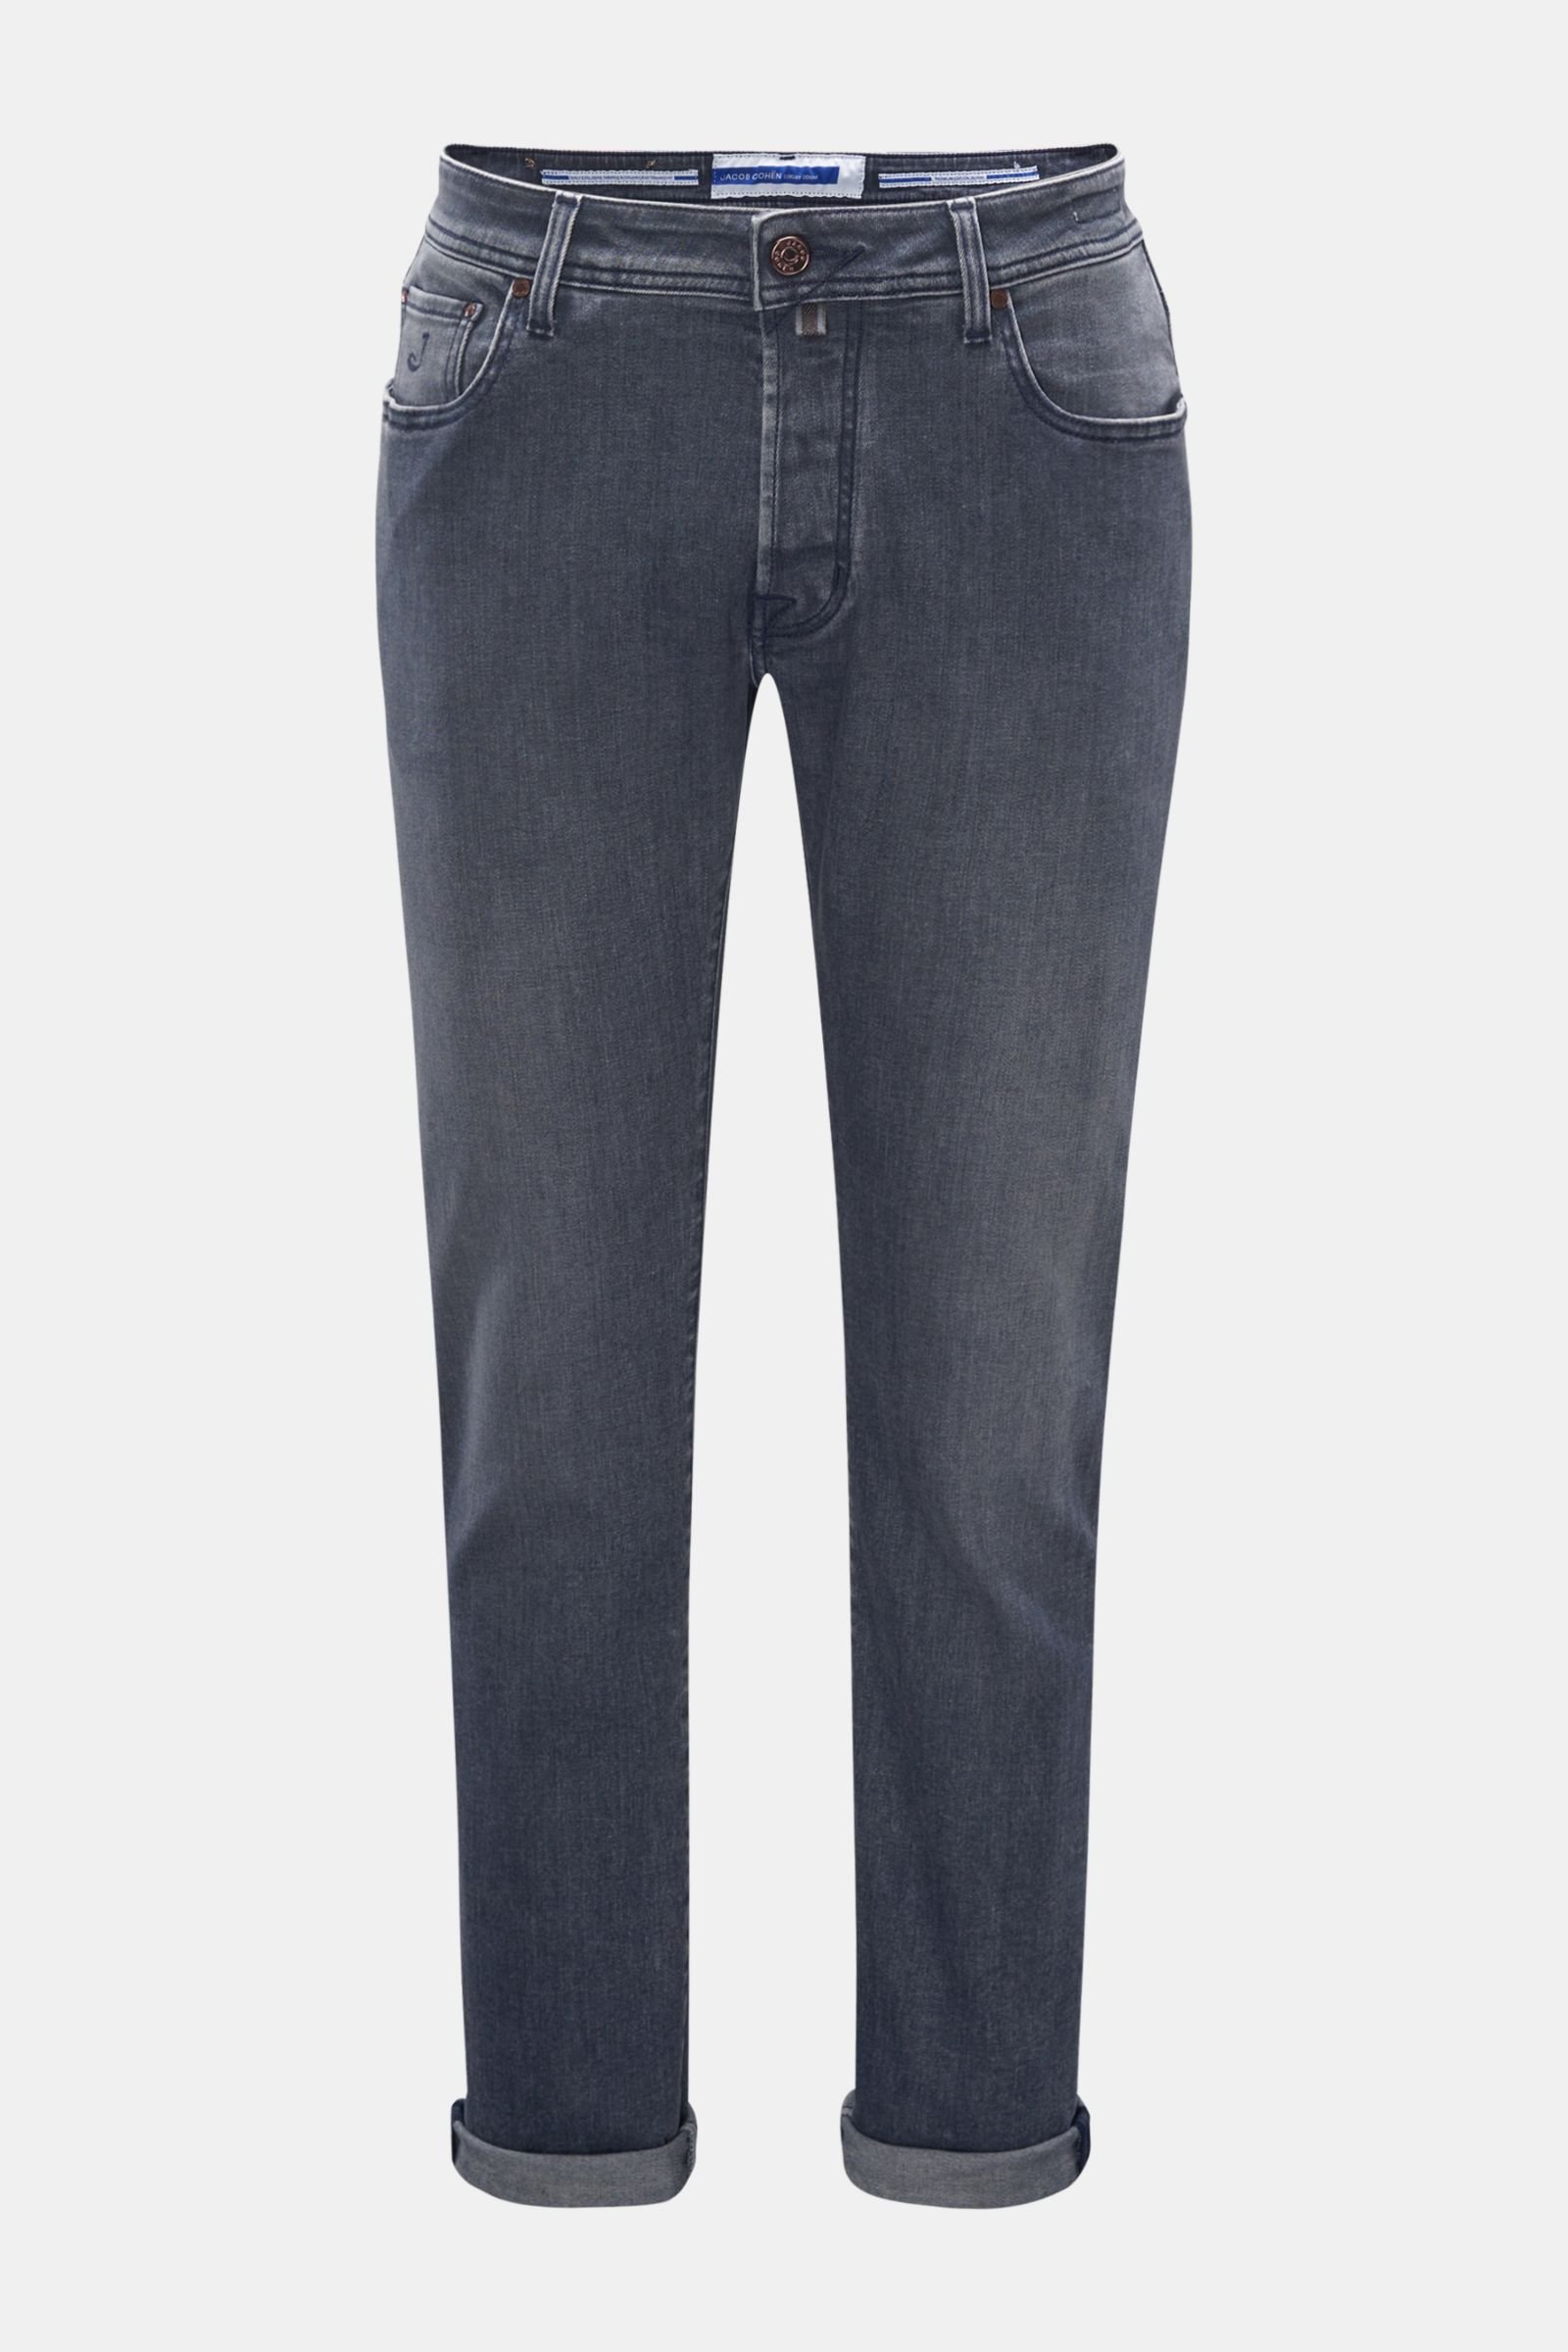 Jeans 'Bard' grey (formerly J688)